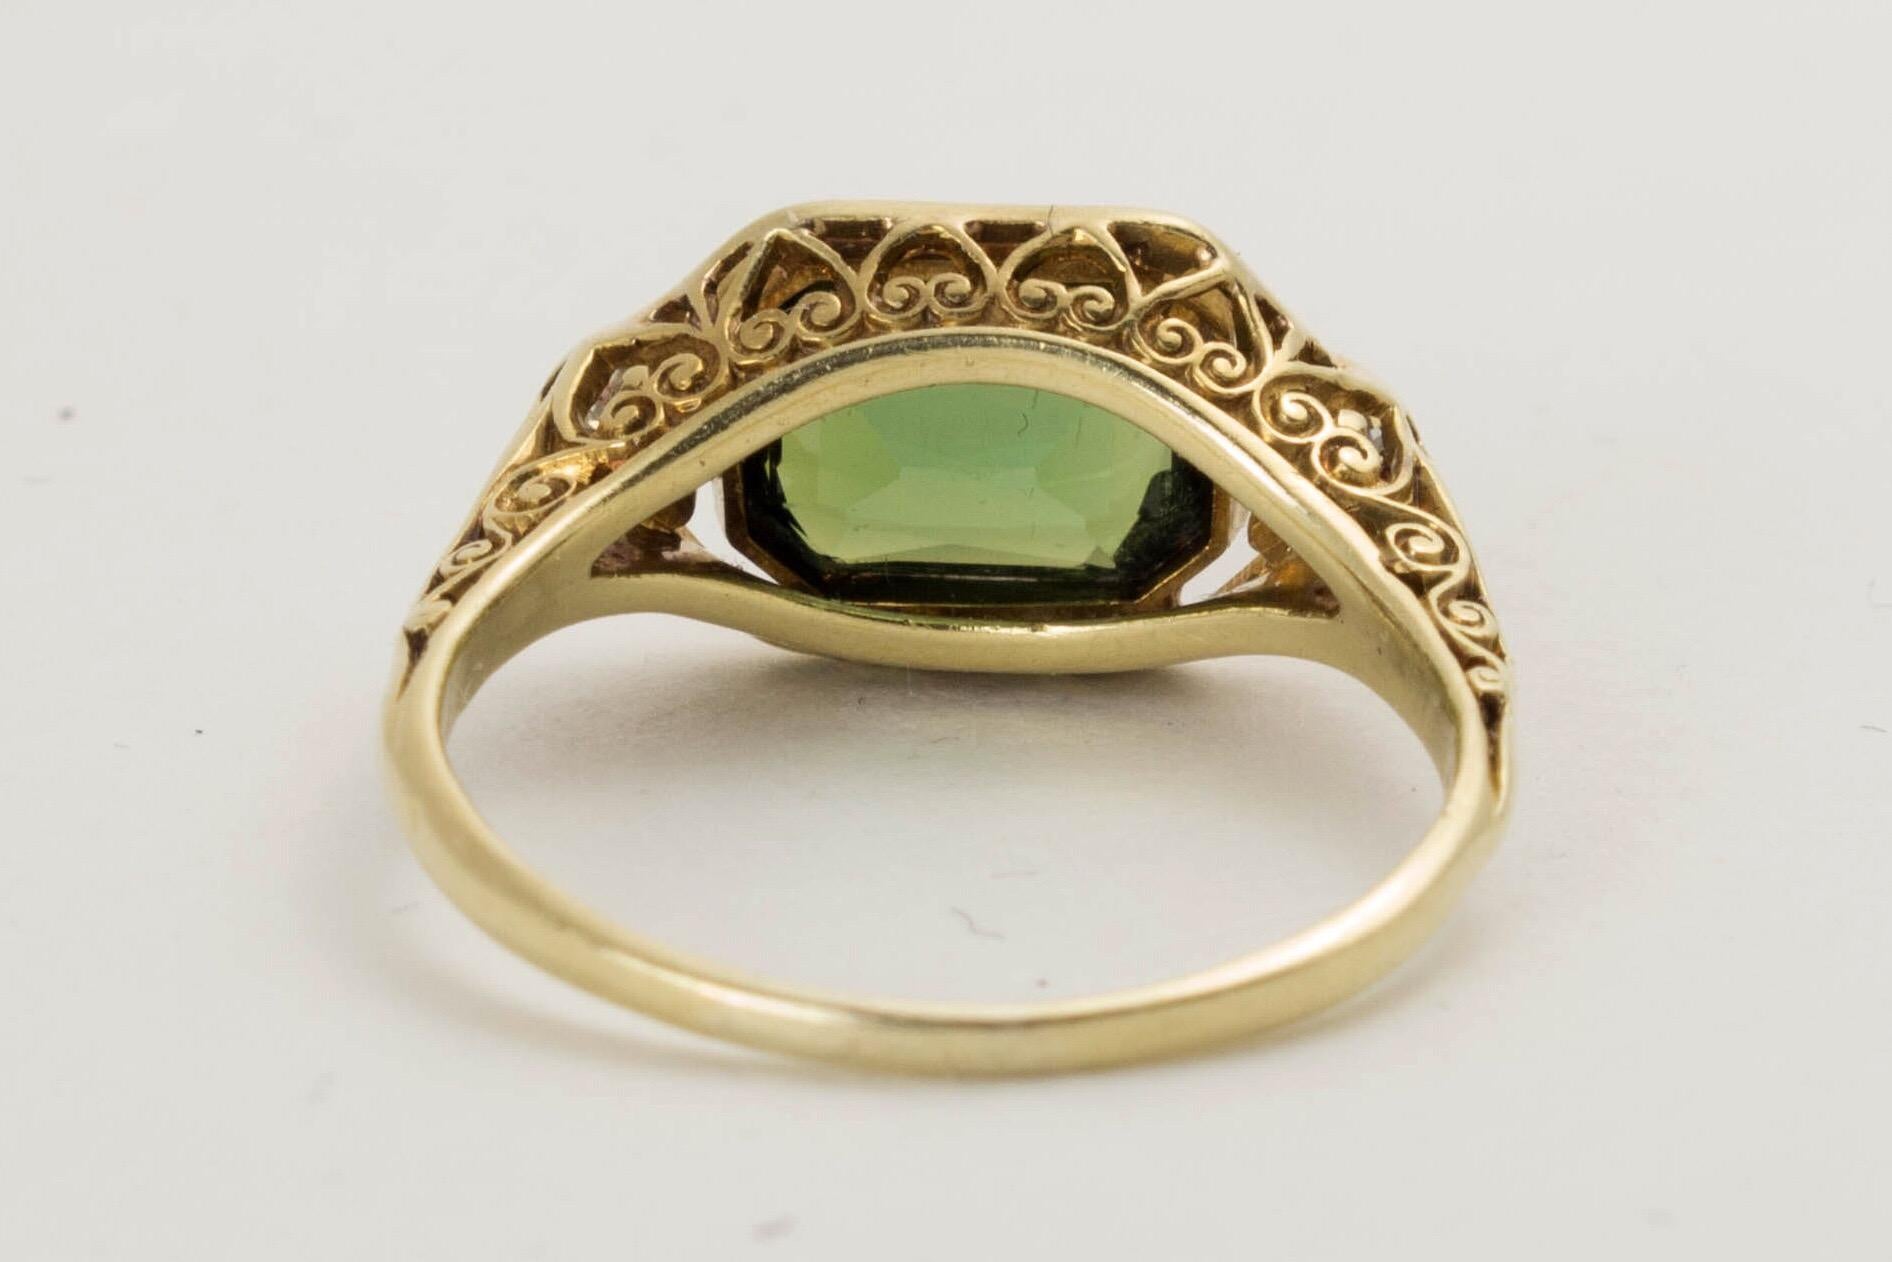 Emerald Cut Larter & Son Art Deco Green Tourmaline Filigree 18 Karat Gold Diamond Ring